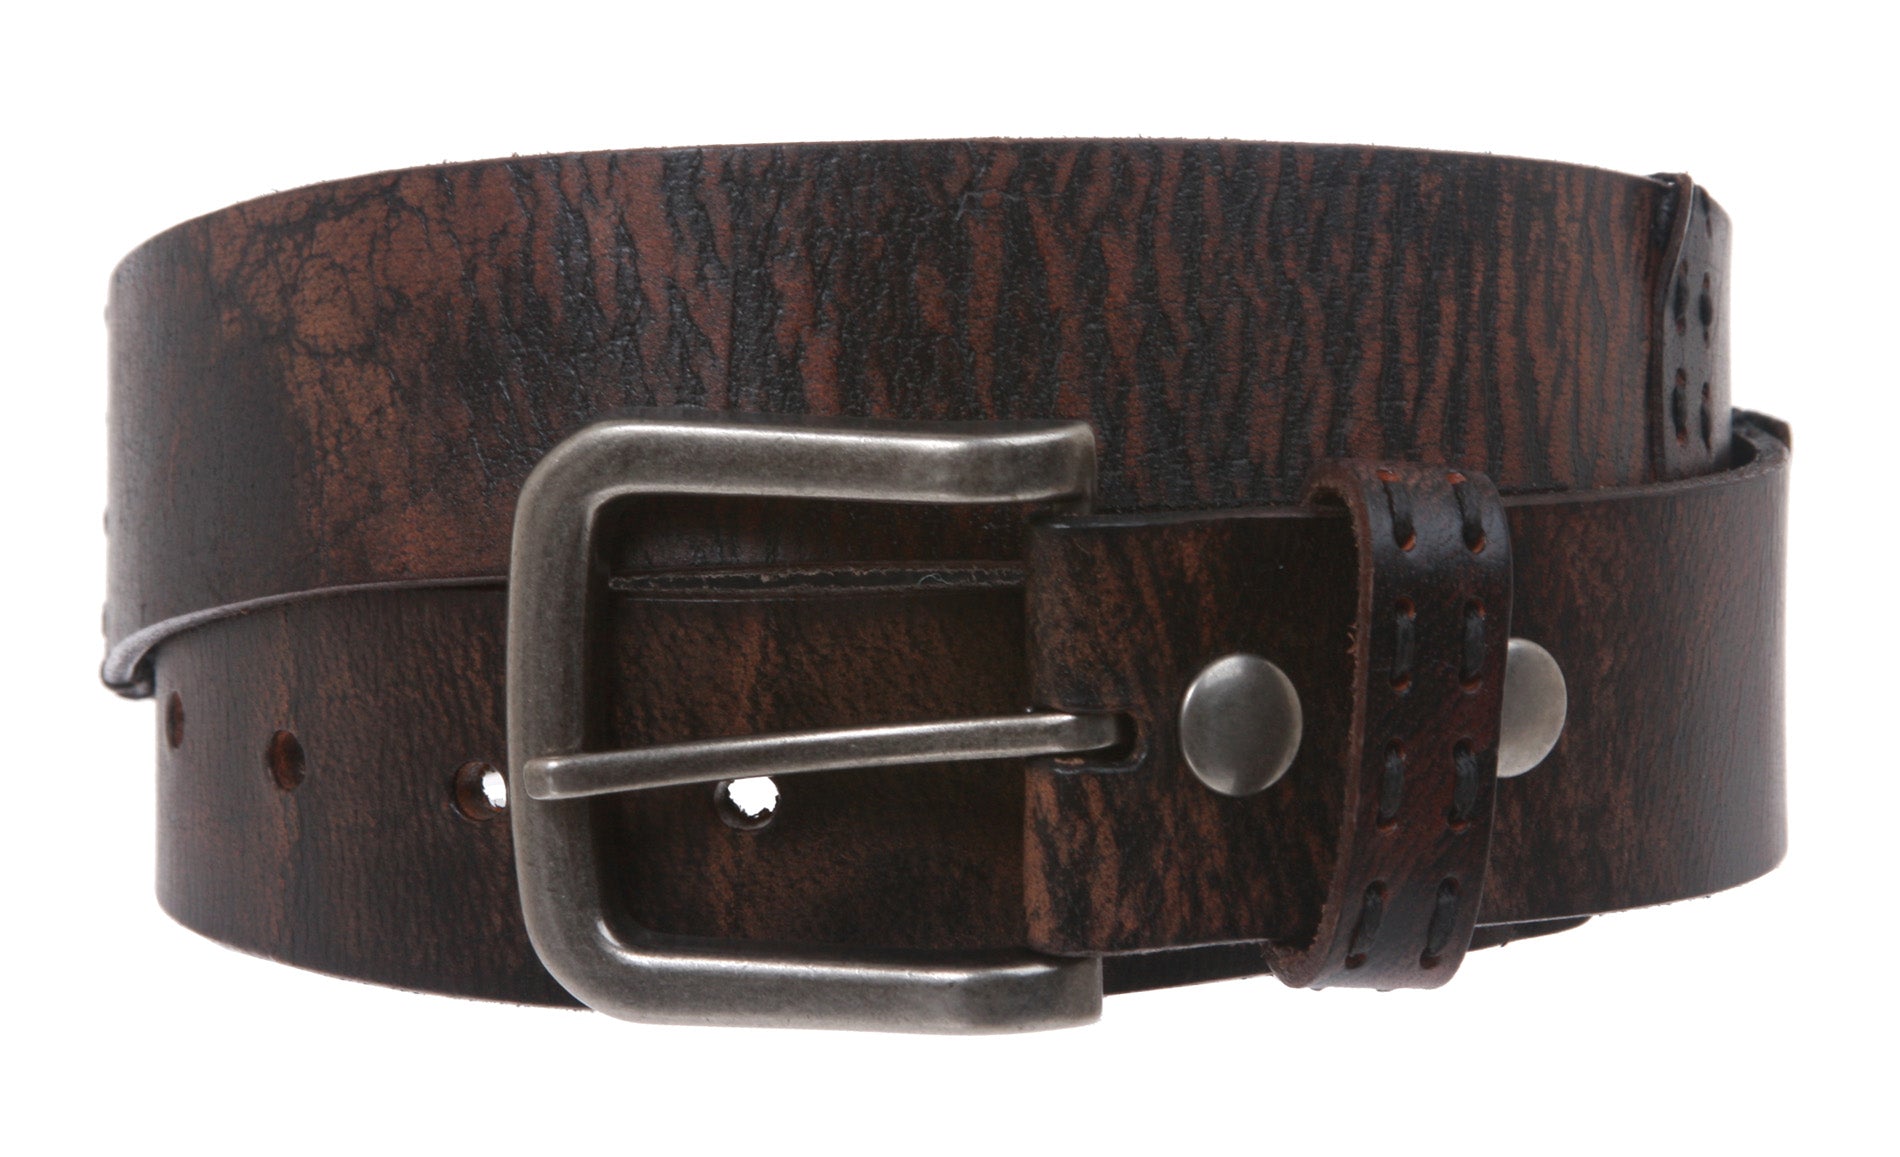 Snap On Oil Tanned Vintage Genuine Leather Belt